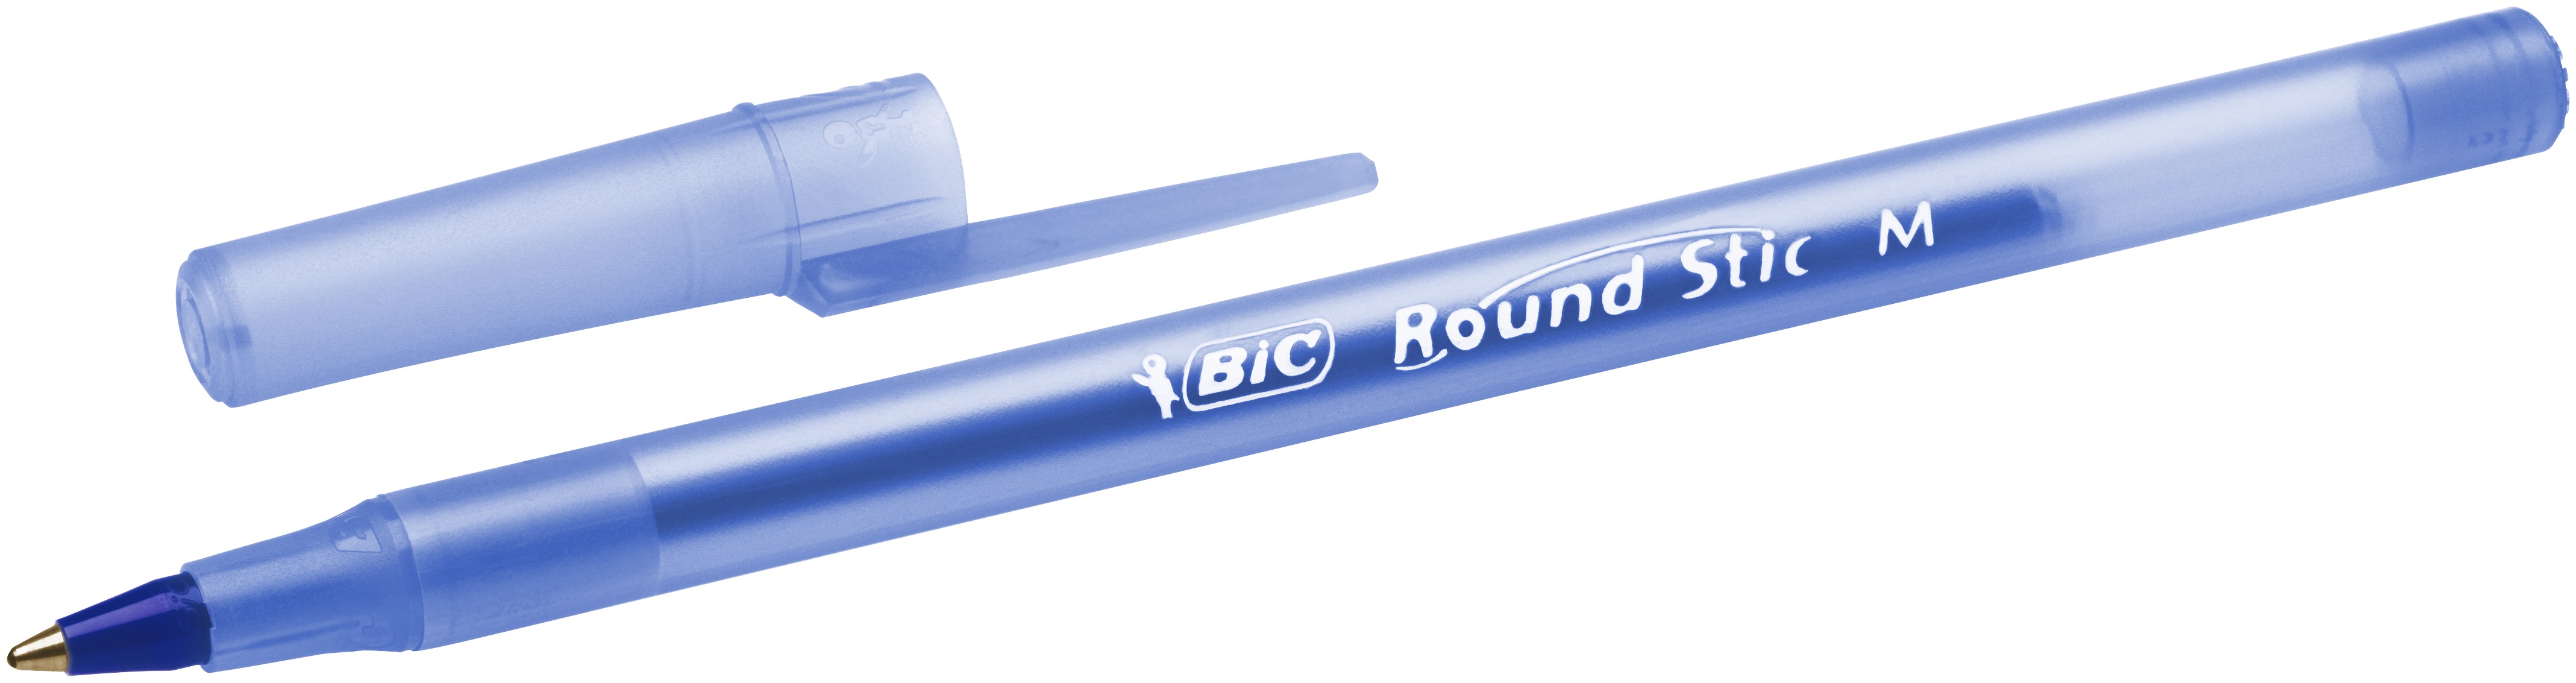 Ручка bic round. Ручка шариковая BIC "Round Stic" синяя, 1,0мм. Ручки BIC Round Stic m. Ручки шариковые BIC Round Stic Classic. Ручка шариковая BIC раунд стик синяя, 921403,0,32 мм.